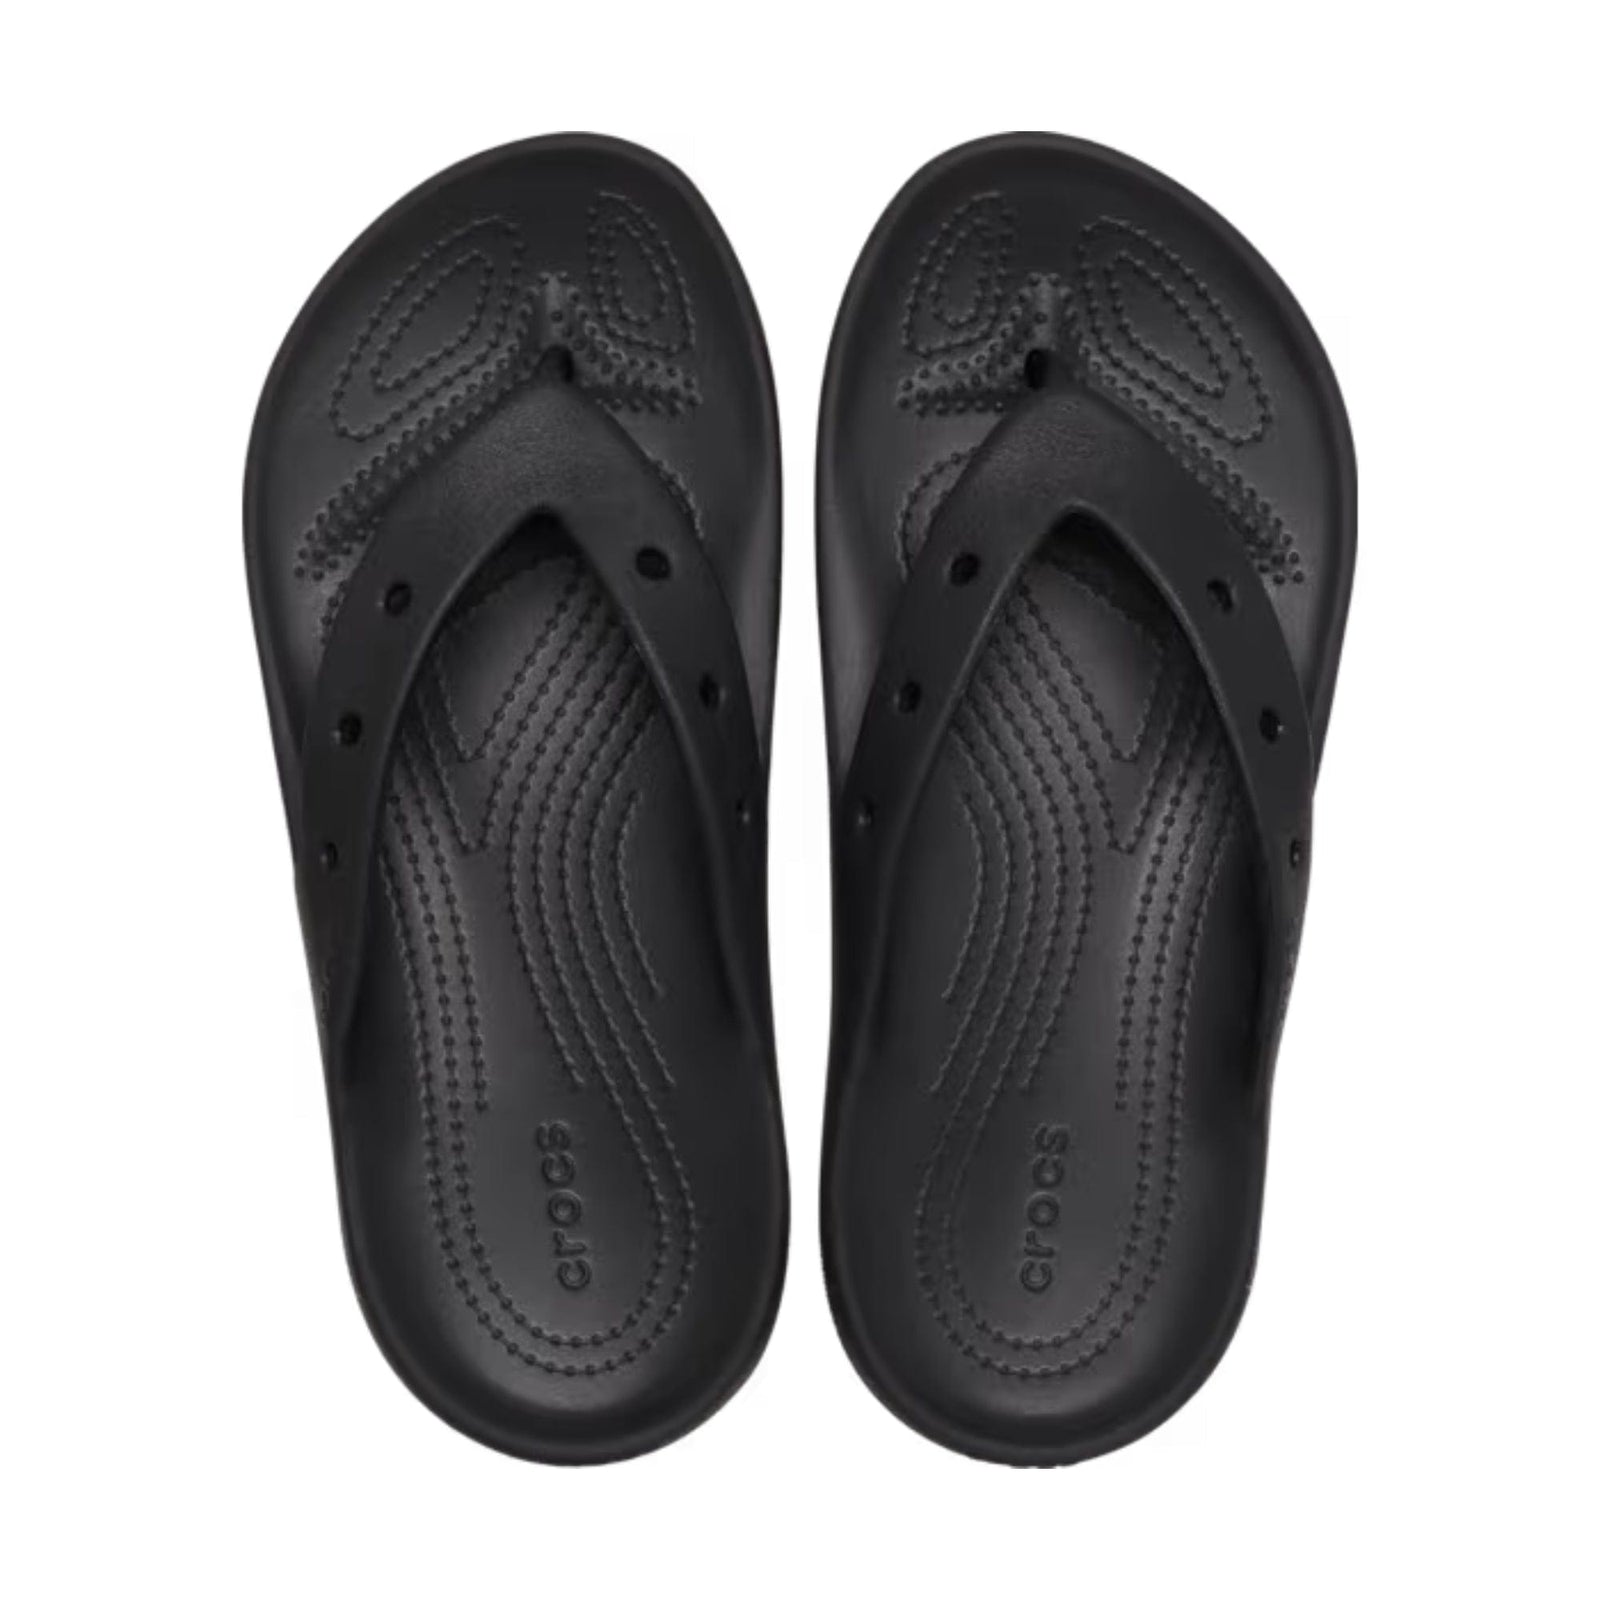 Crocs Classic Flip-flop in Black